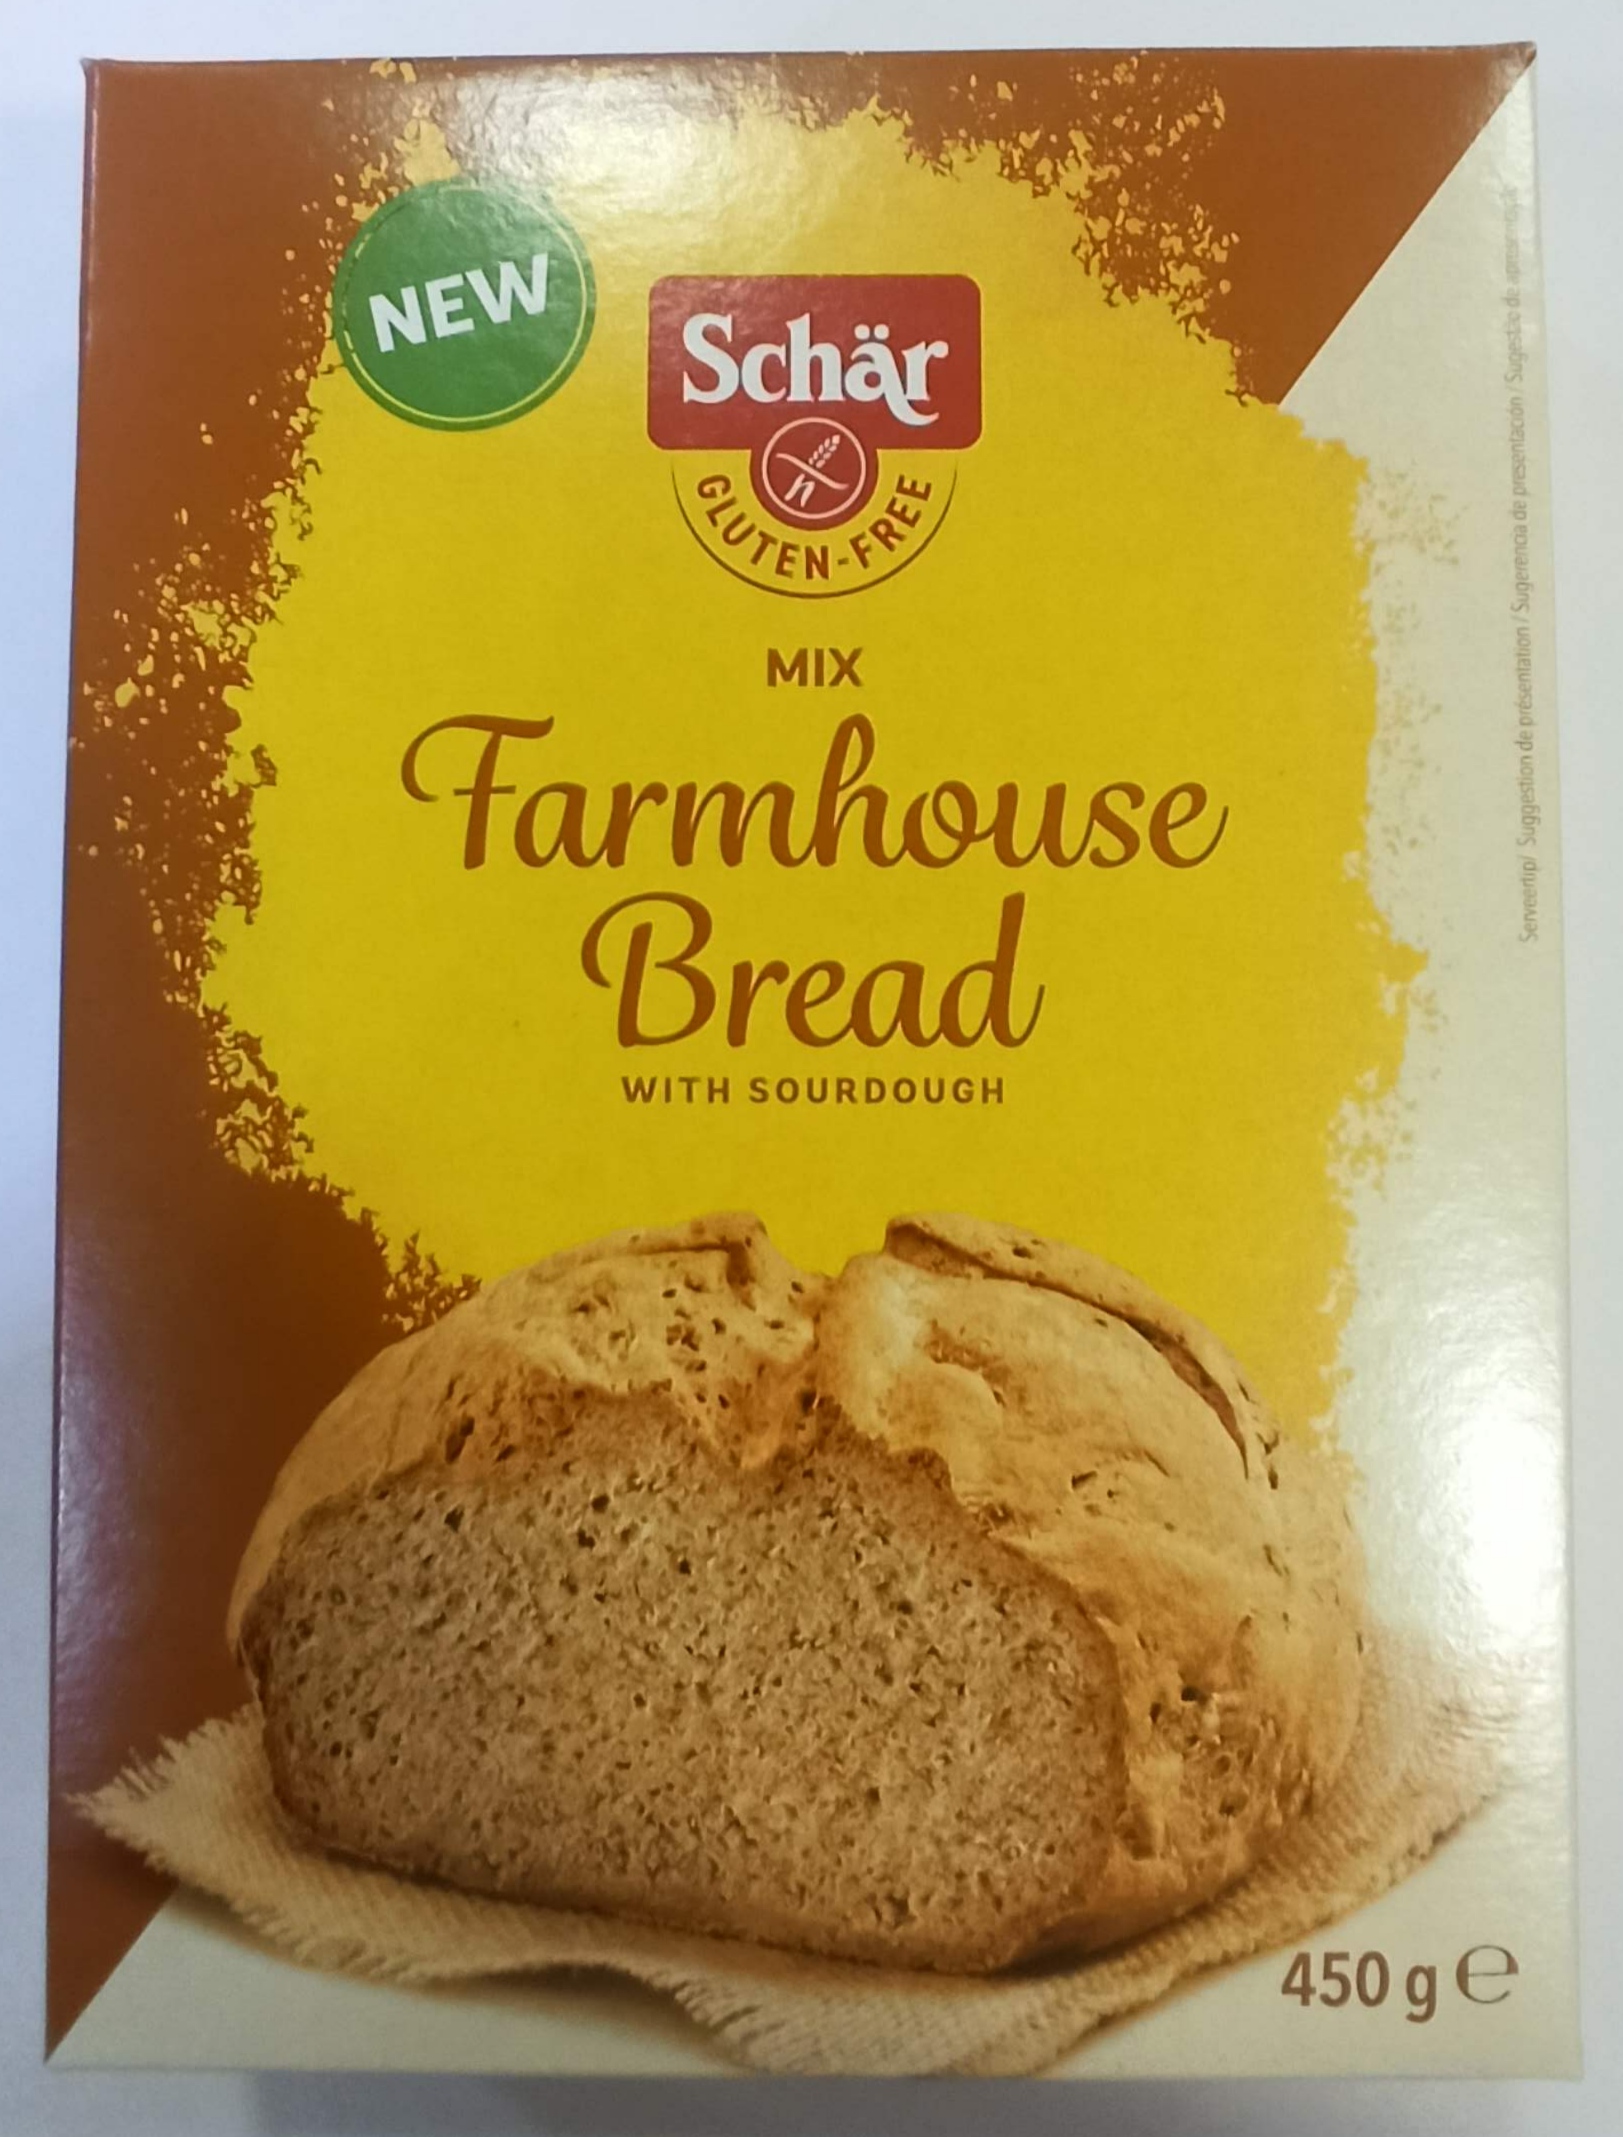 Mix Farmhouse Bread Schär